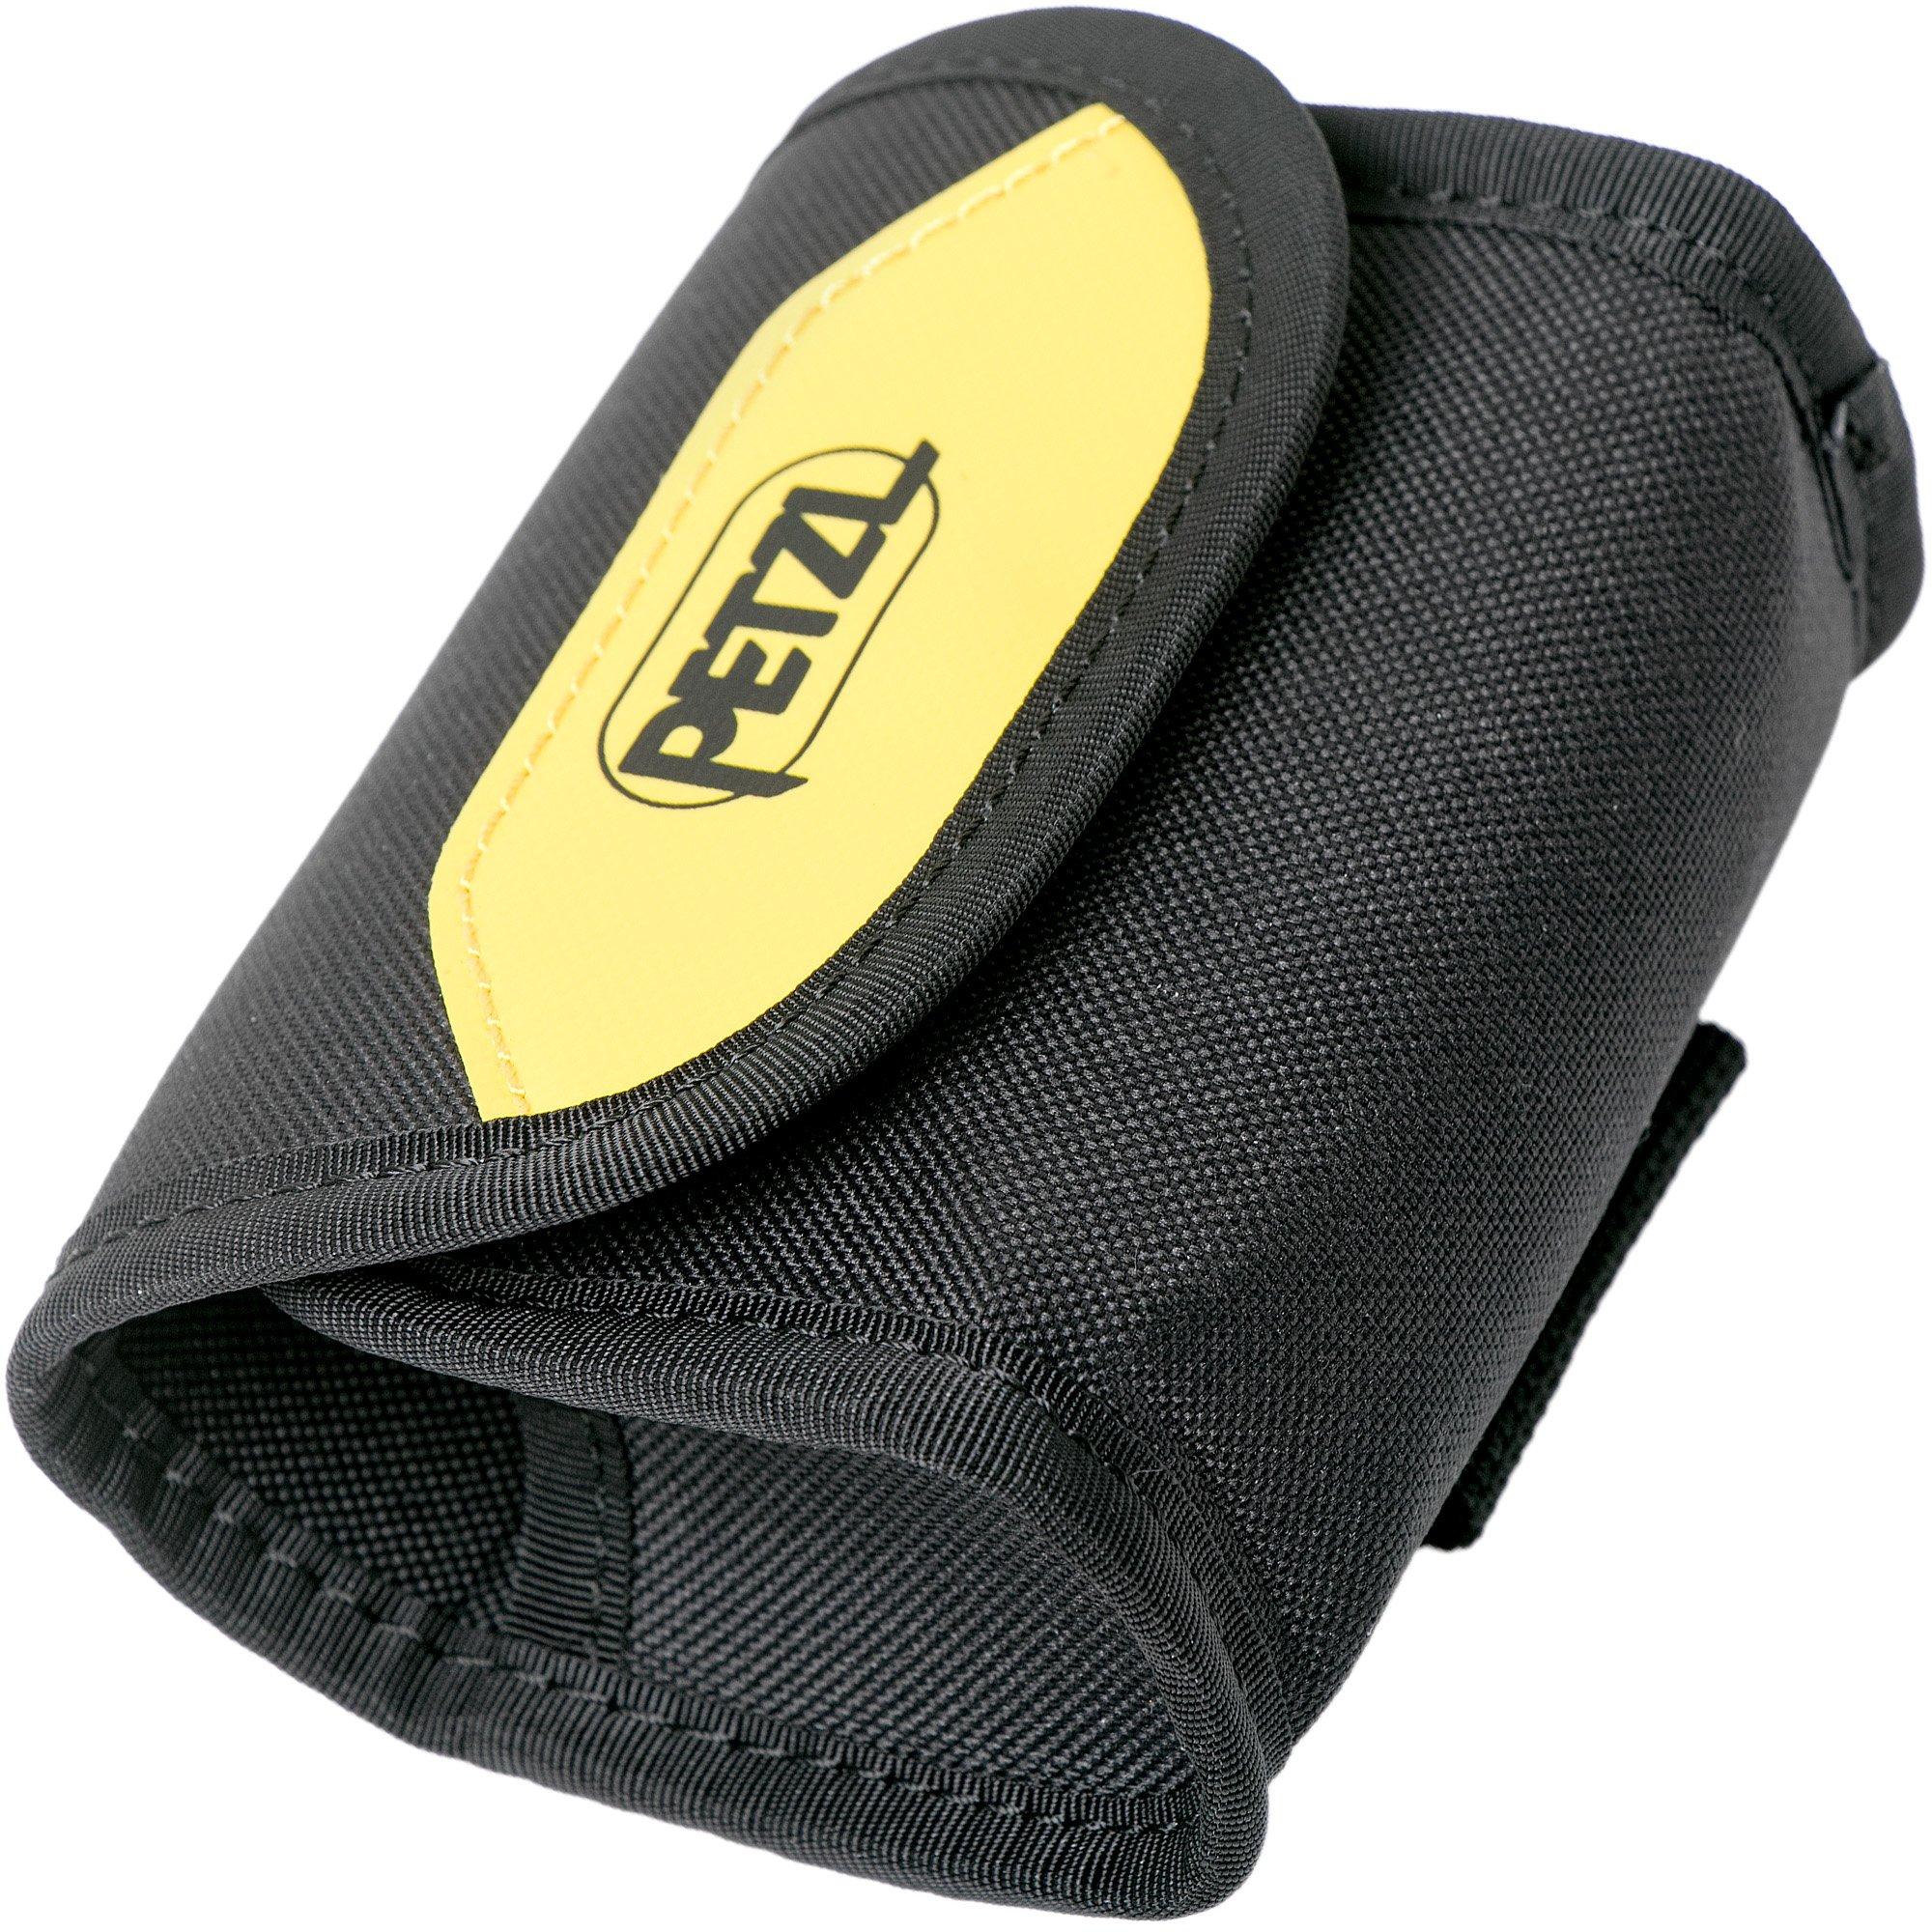 PETZL PIXA Carry Case E78001